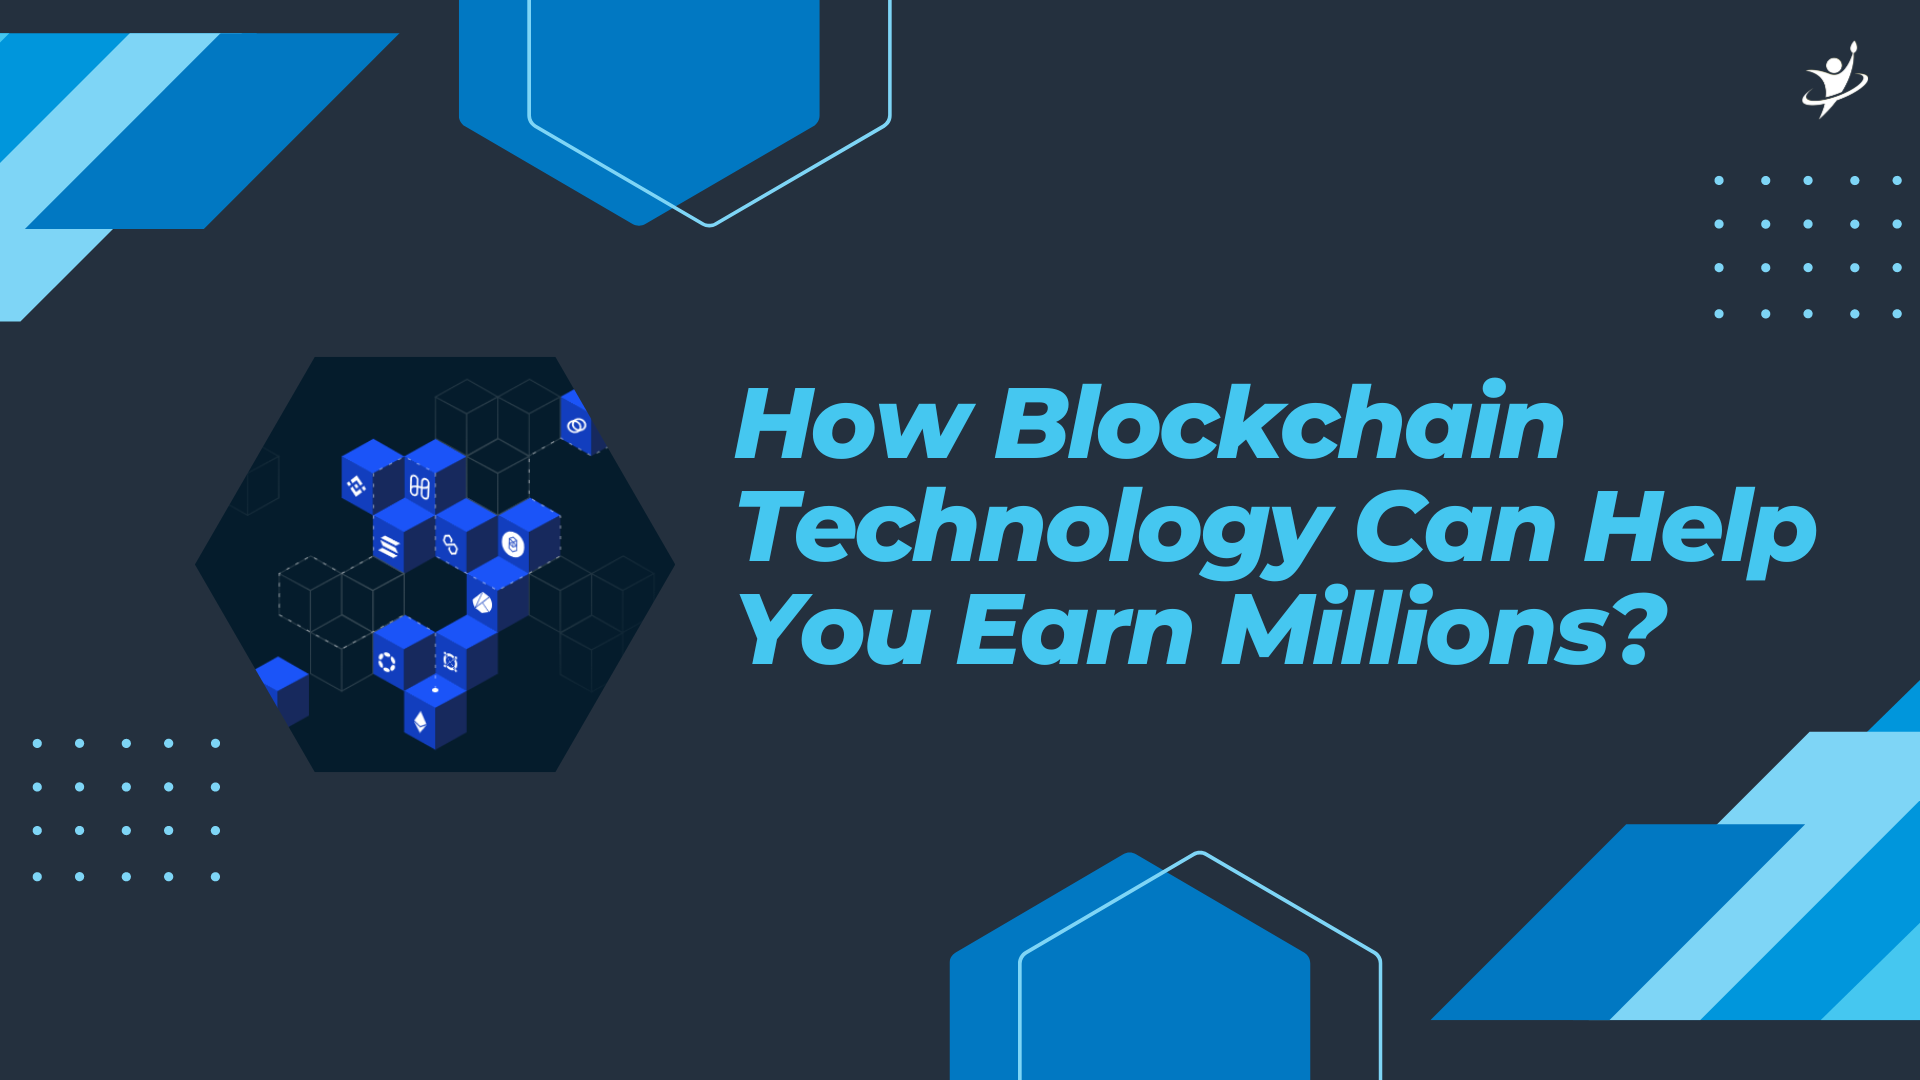 Blockchain Technology Can Help You Earn Millions.